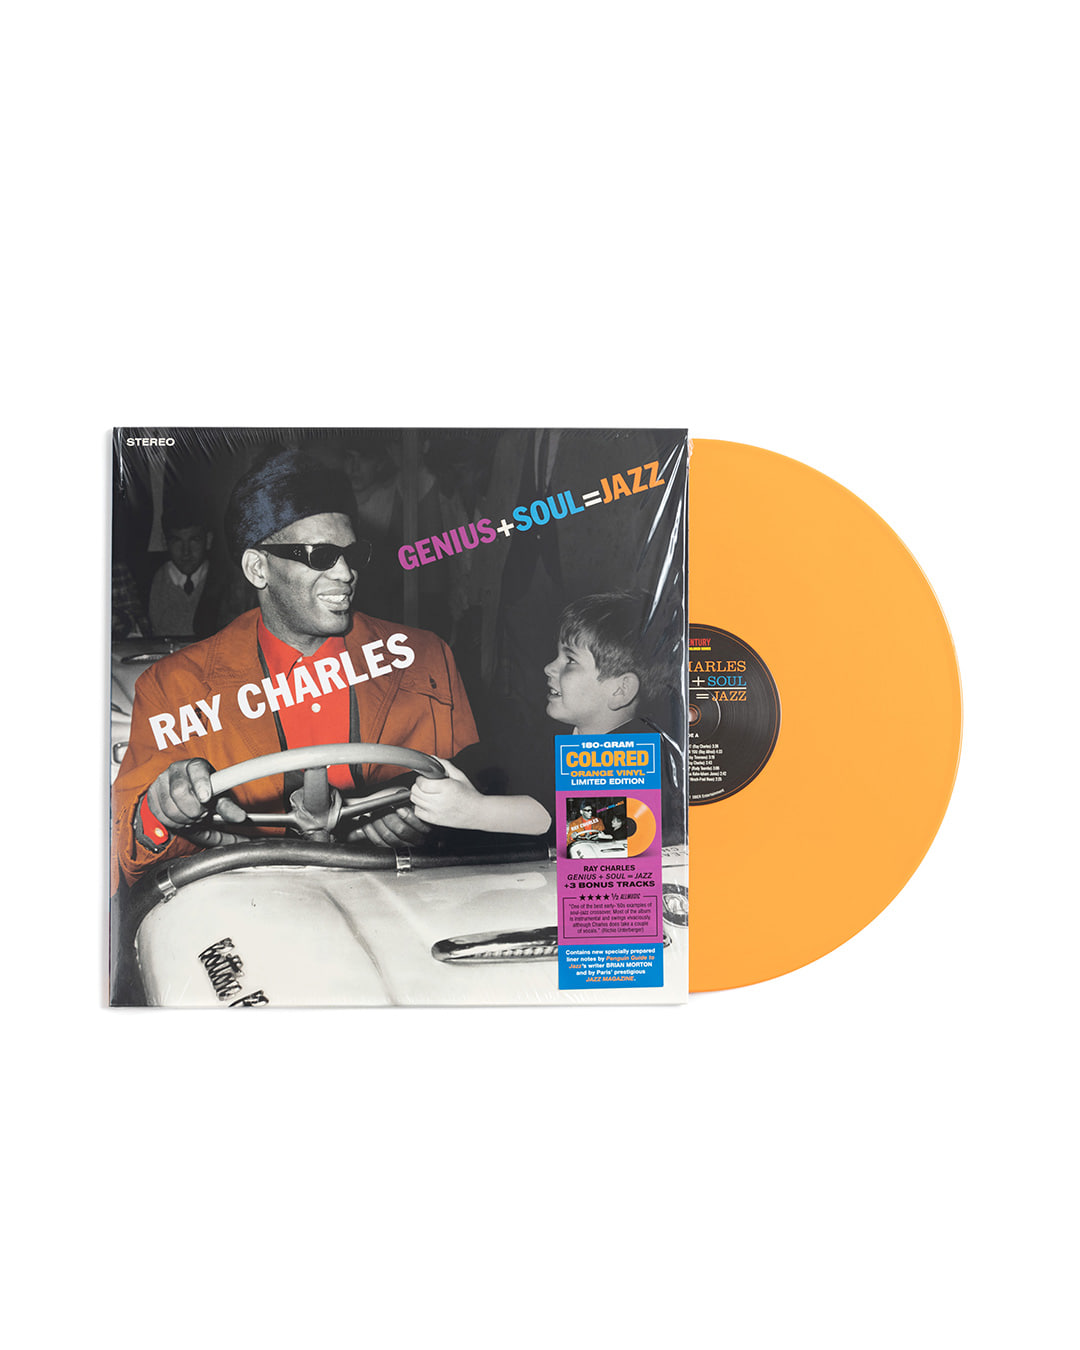 RAY CHARLES - GENIUS + SOUL = JAZZ (orange disc)